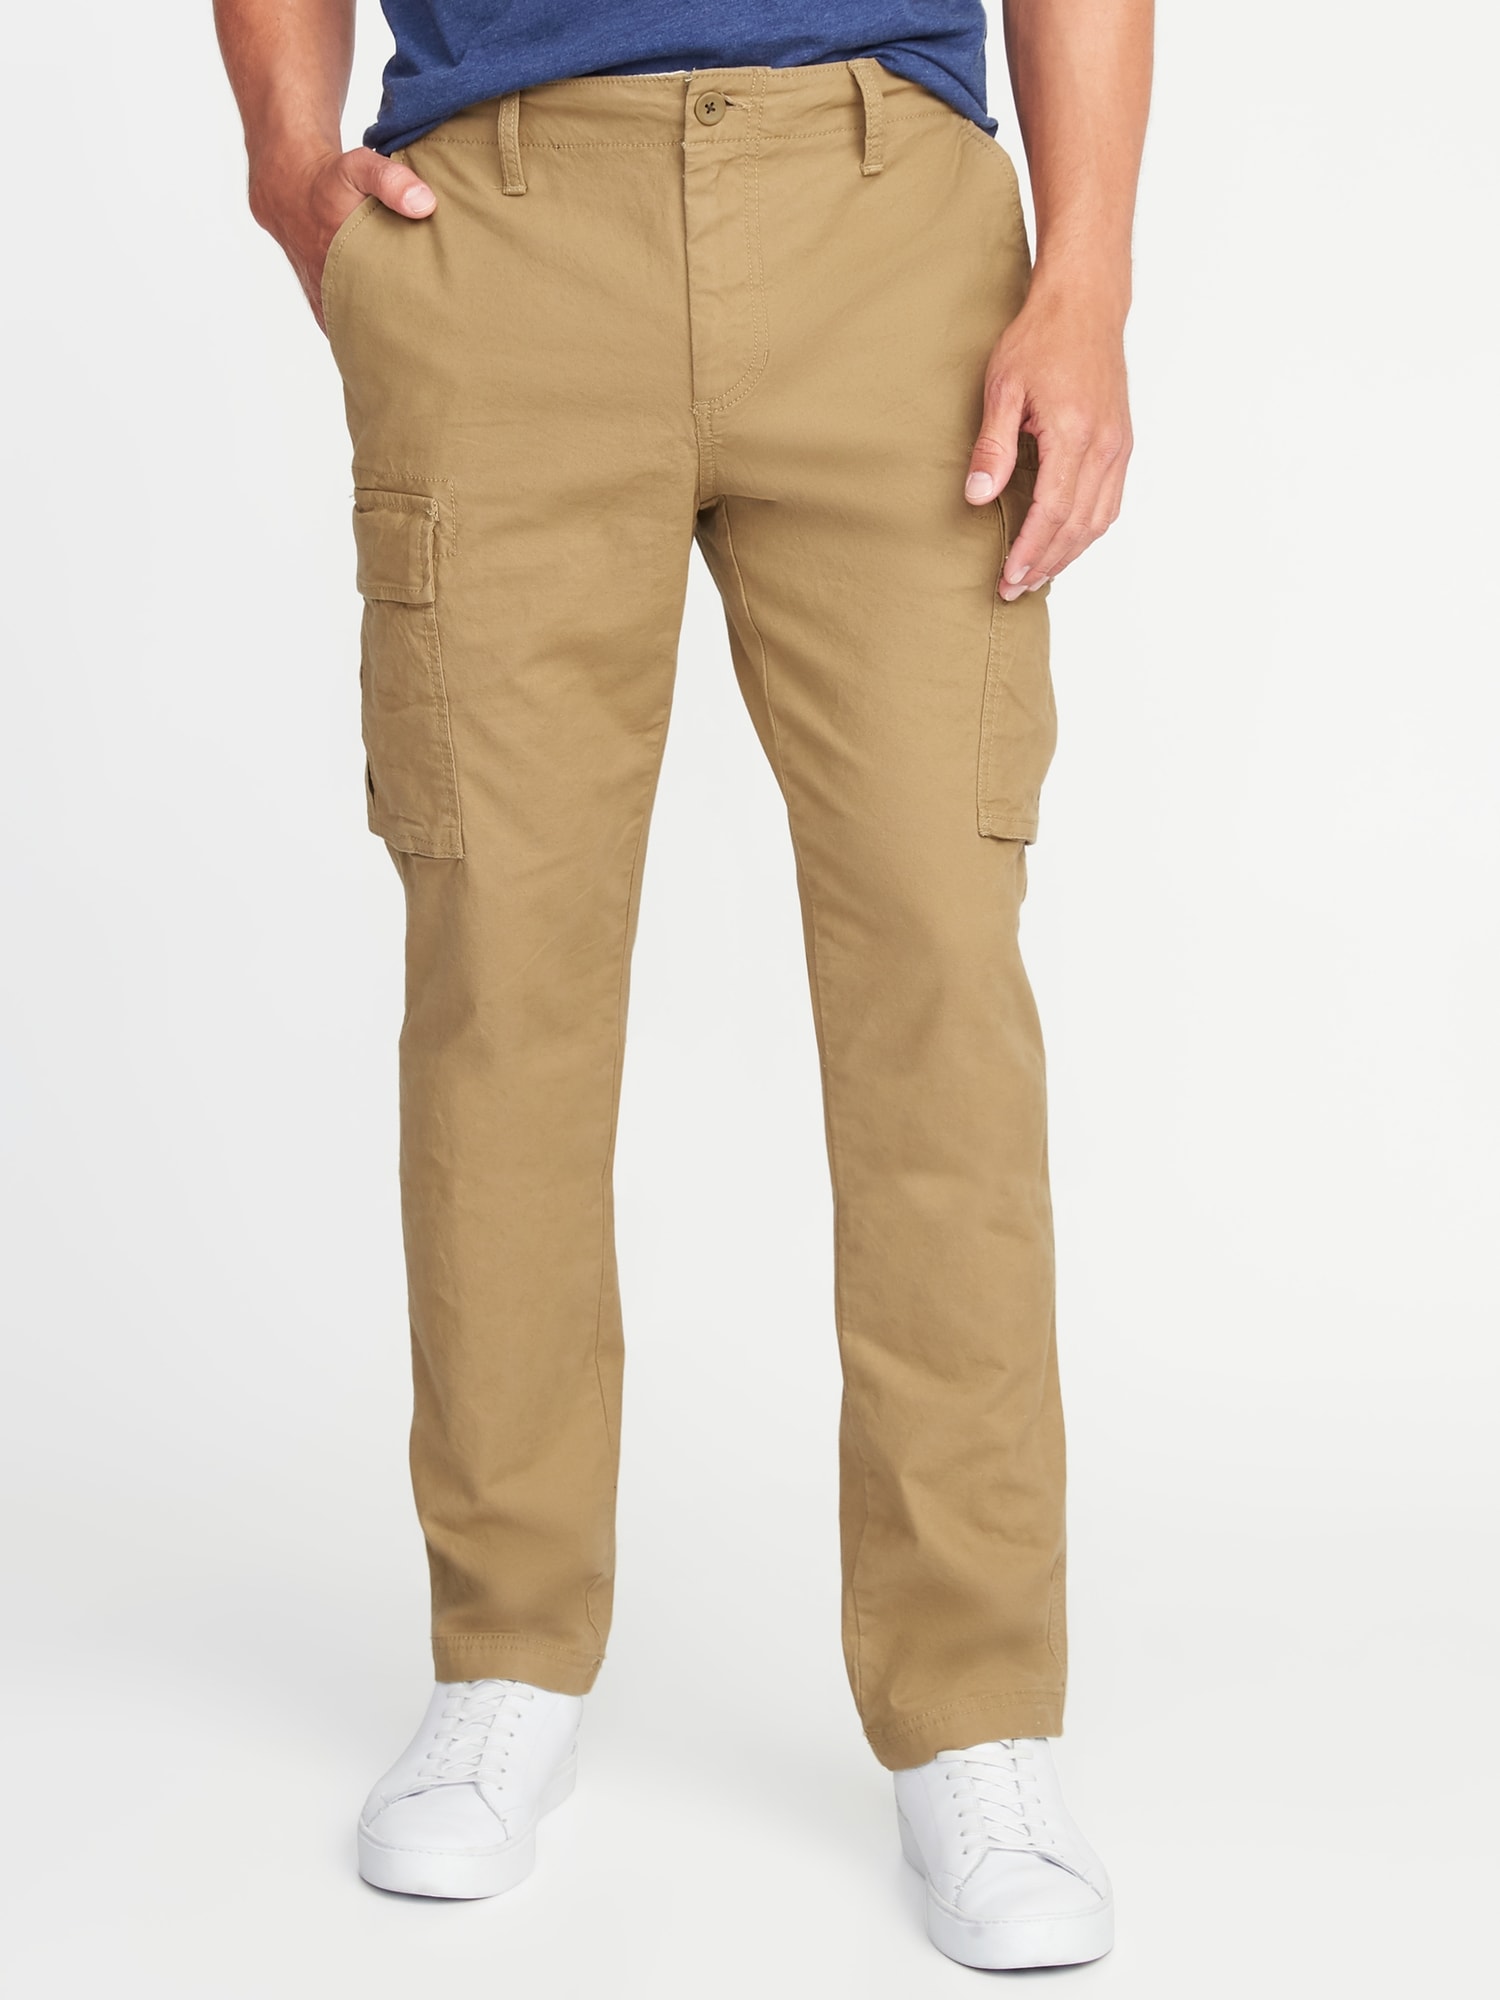 Old Navy Men's Cargo Pants Tan 32x30 Straight Leg Cotton Pockets | eBay